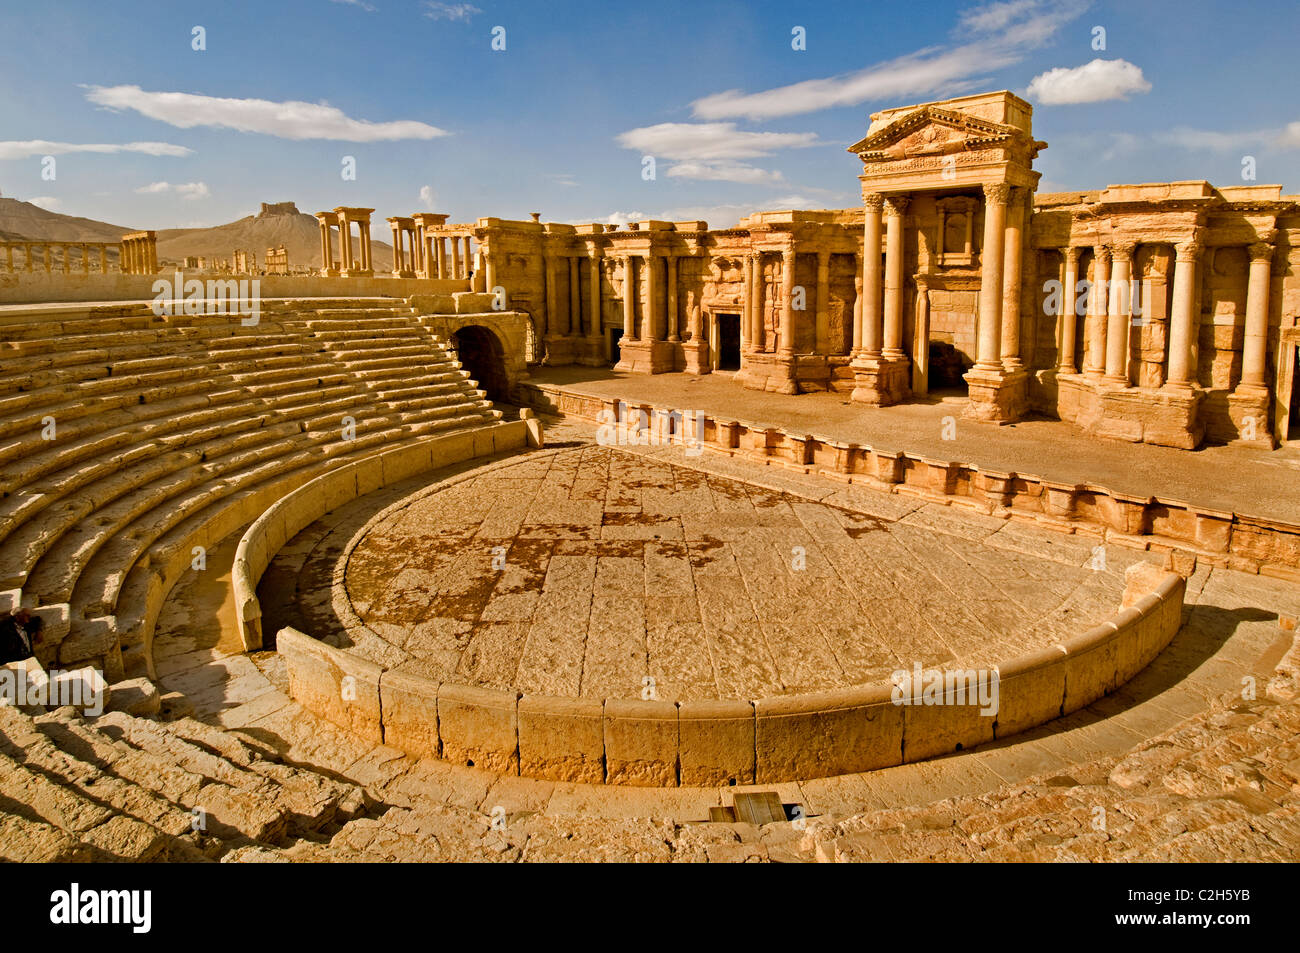 Römisches Amphitheater Theater Arena cirque in Palmyra Syrien zweiten Jahrhundert, 2. Jahrhundert Stockfoto